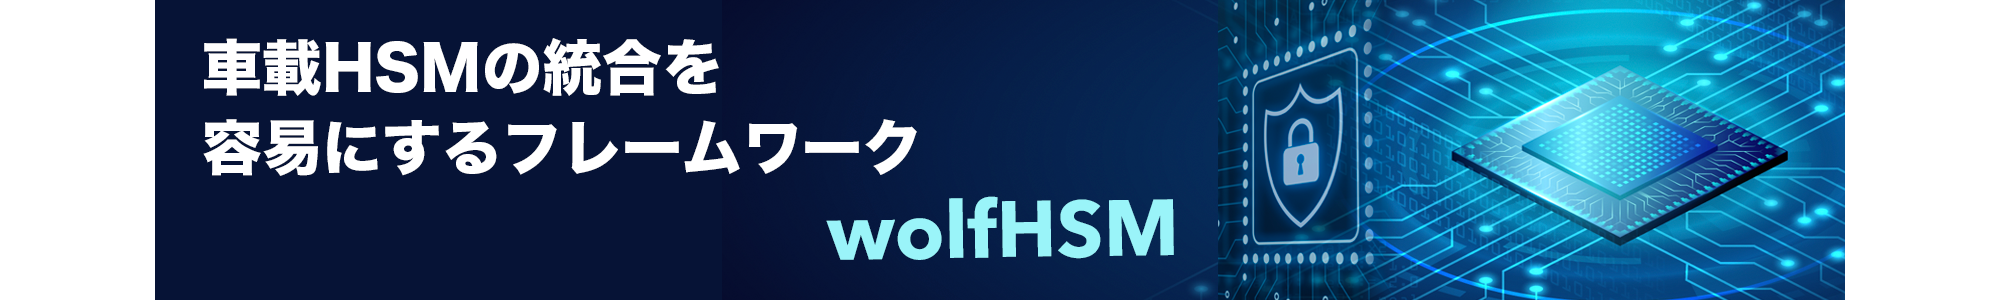 wolfHSM_